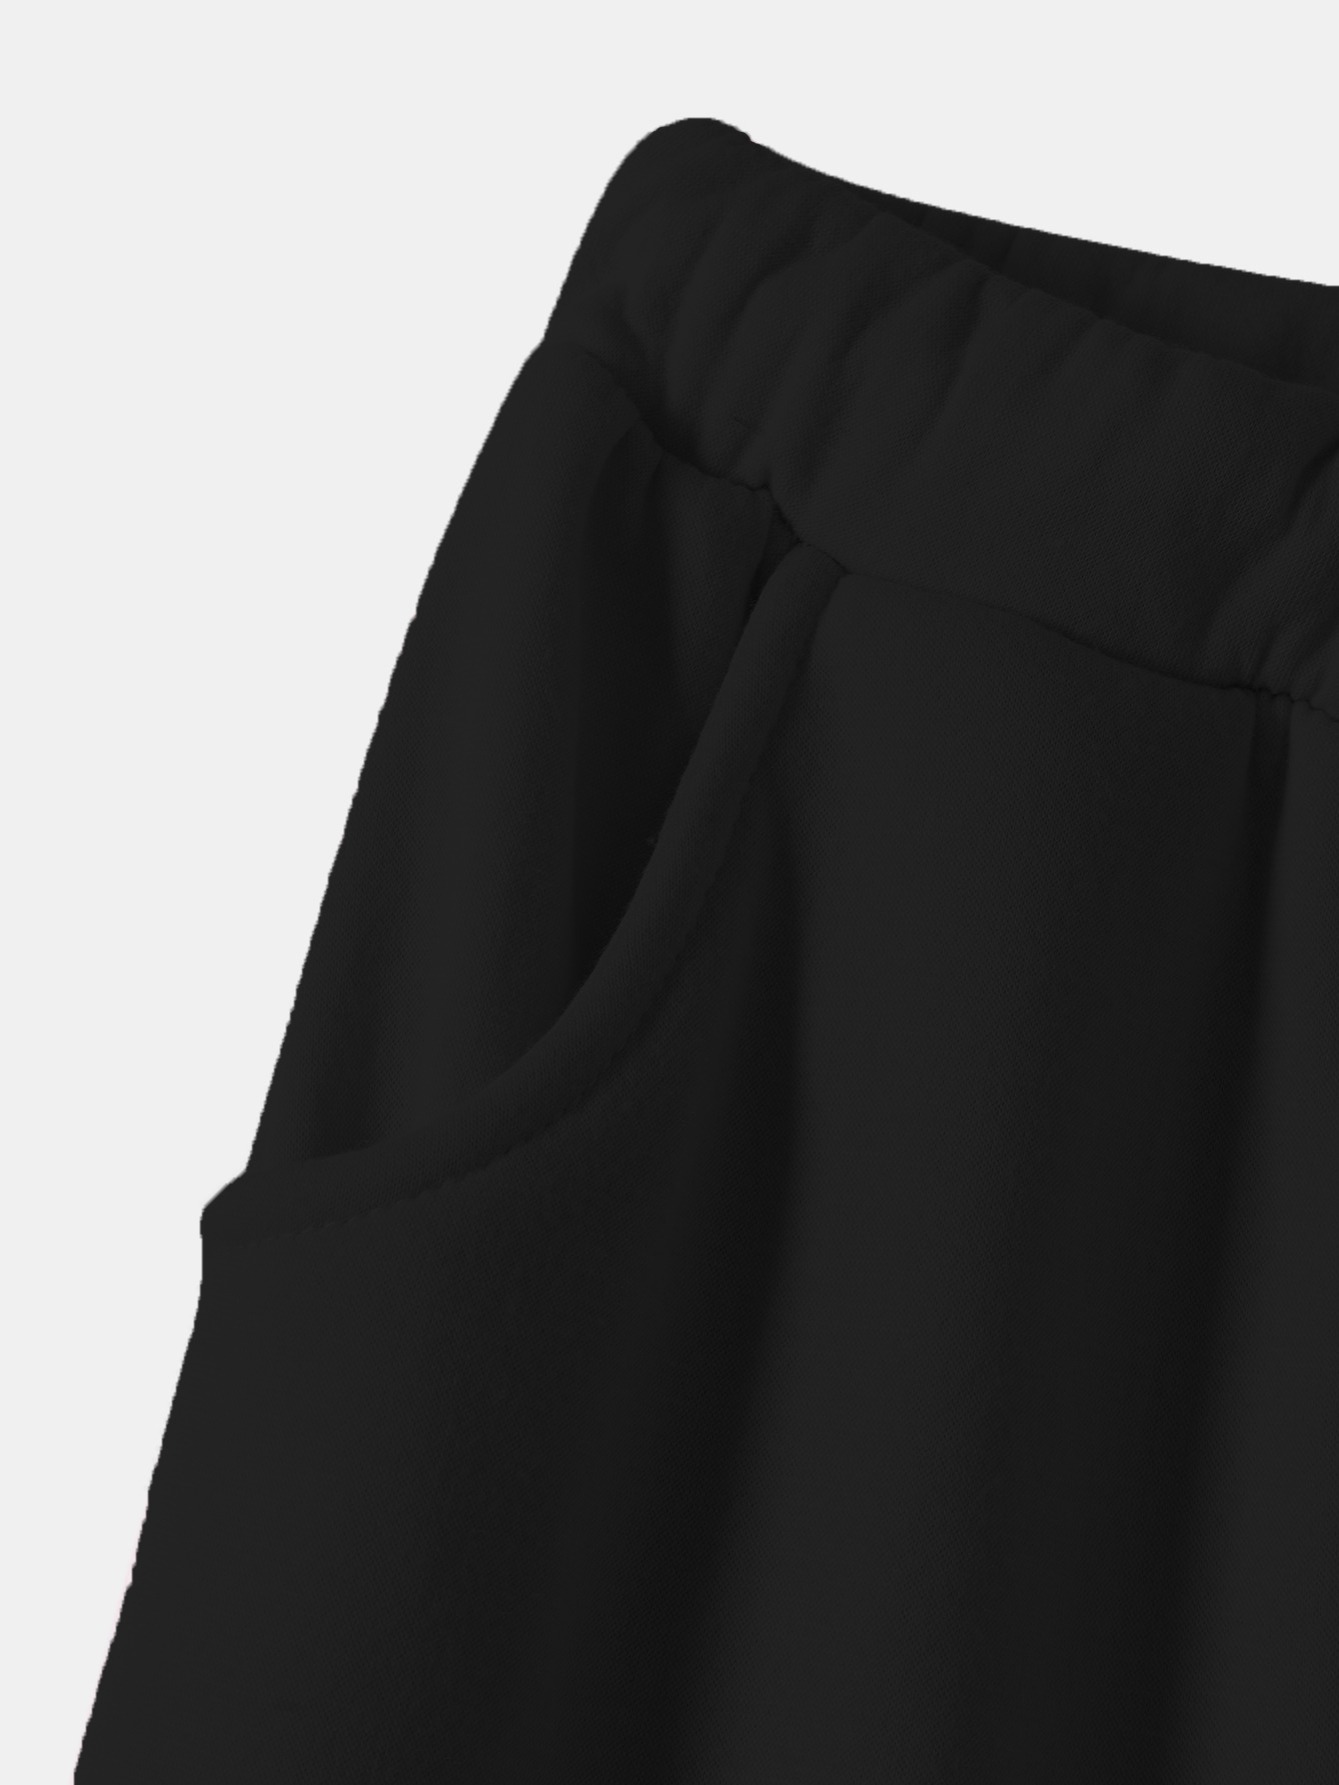 solid drawstring thermal sweatpants versatile loose comfy jogger pants womens clothing details 7